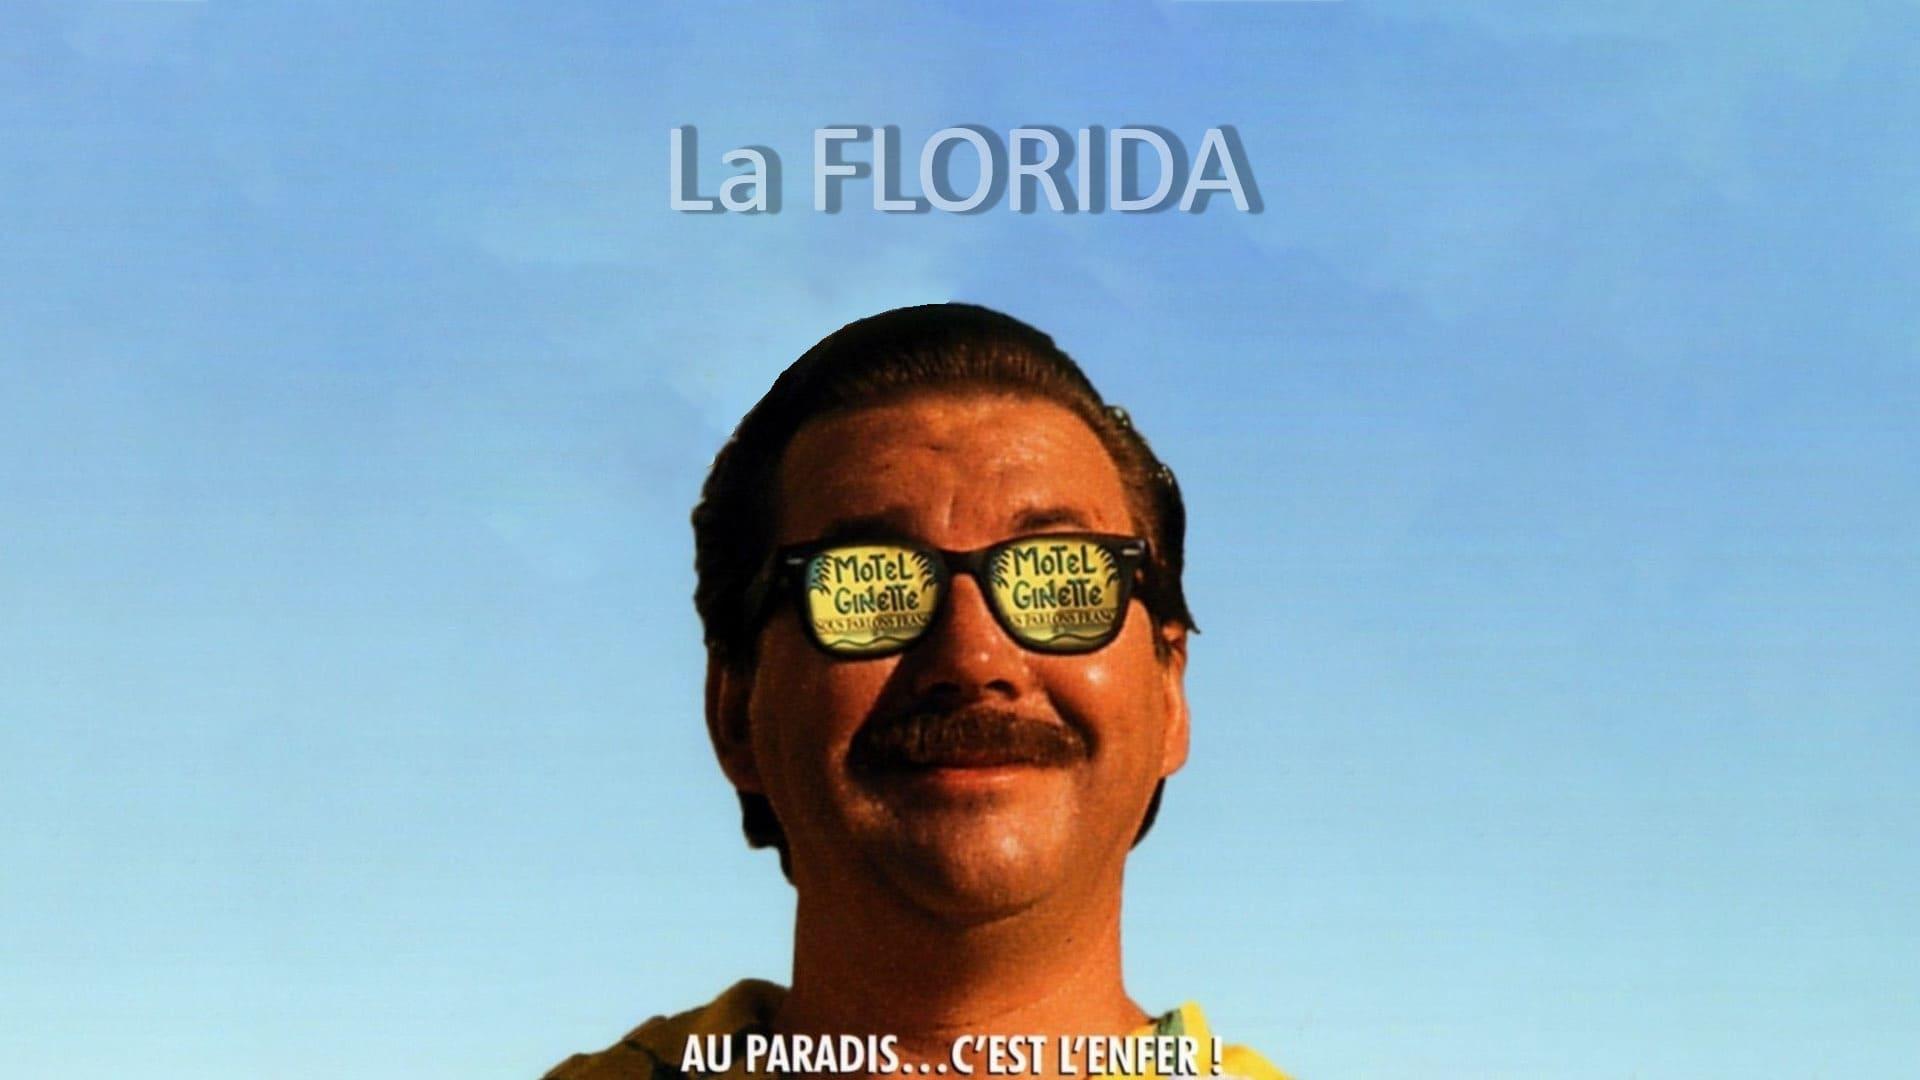 La Florida backdrop